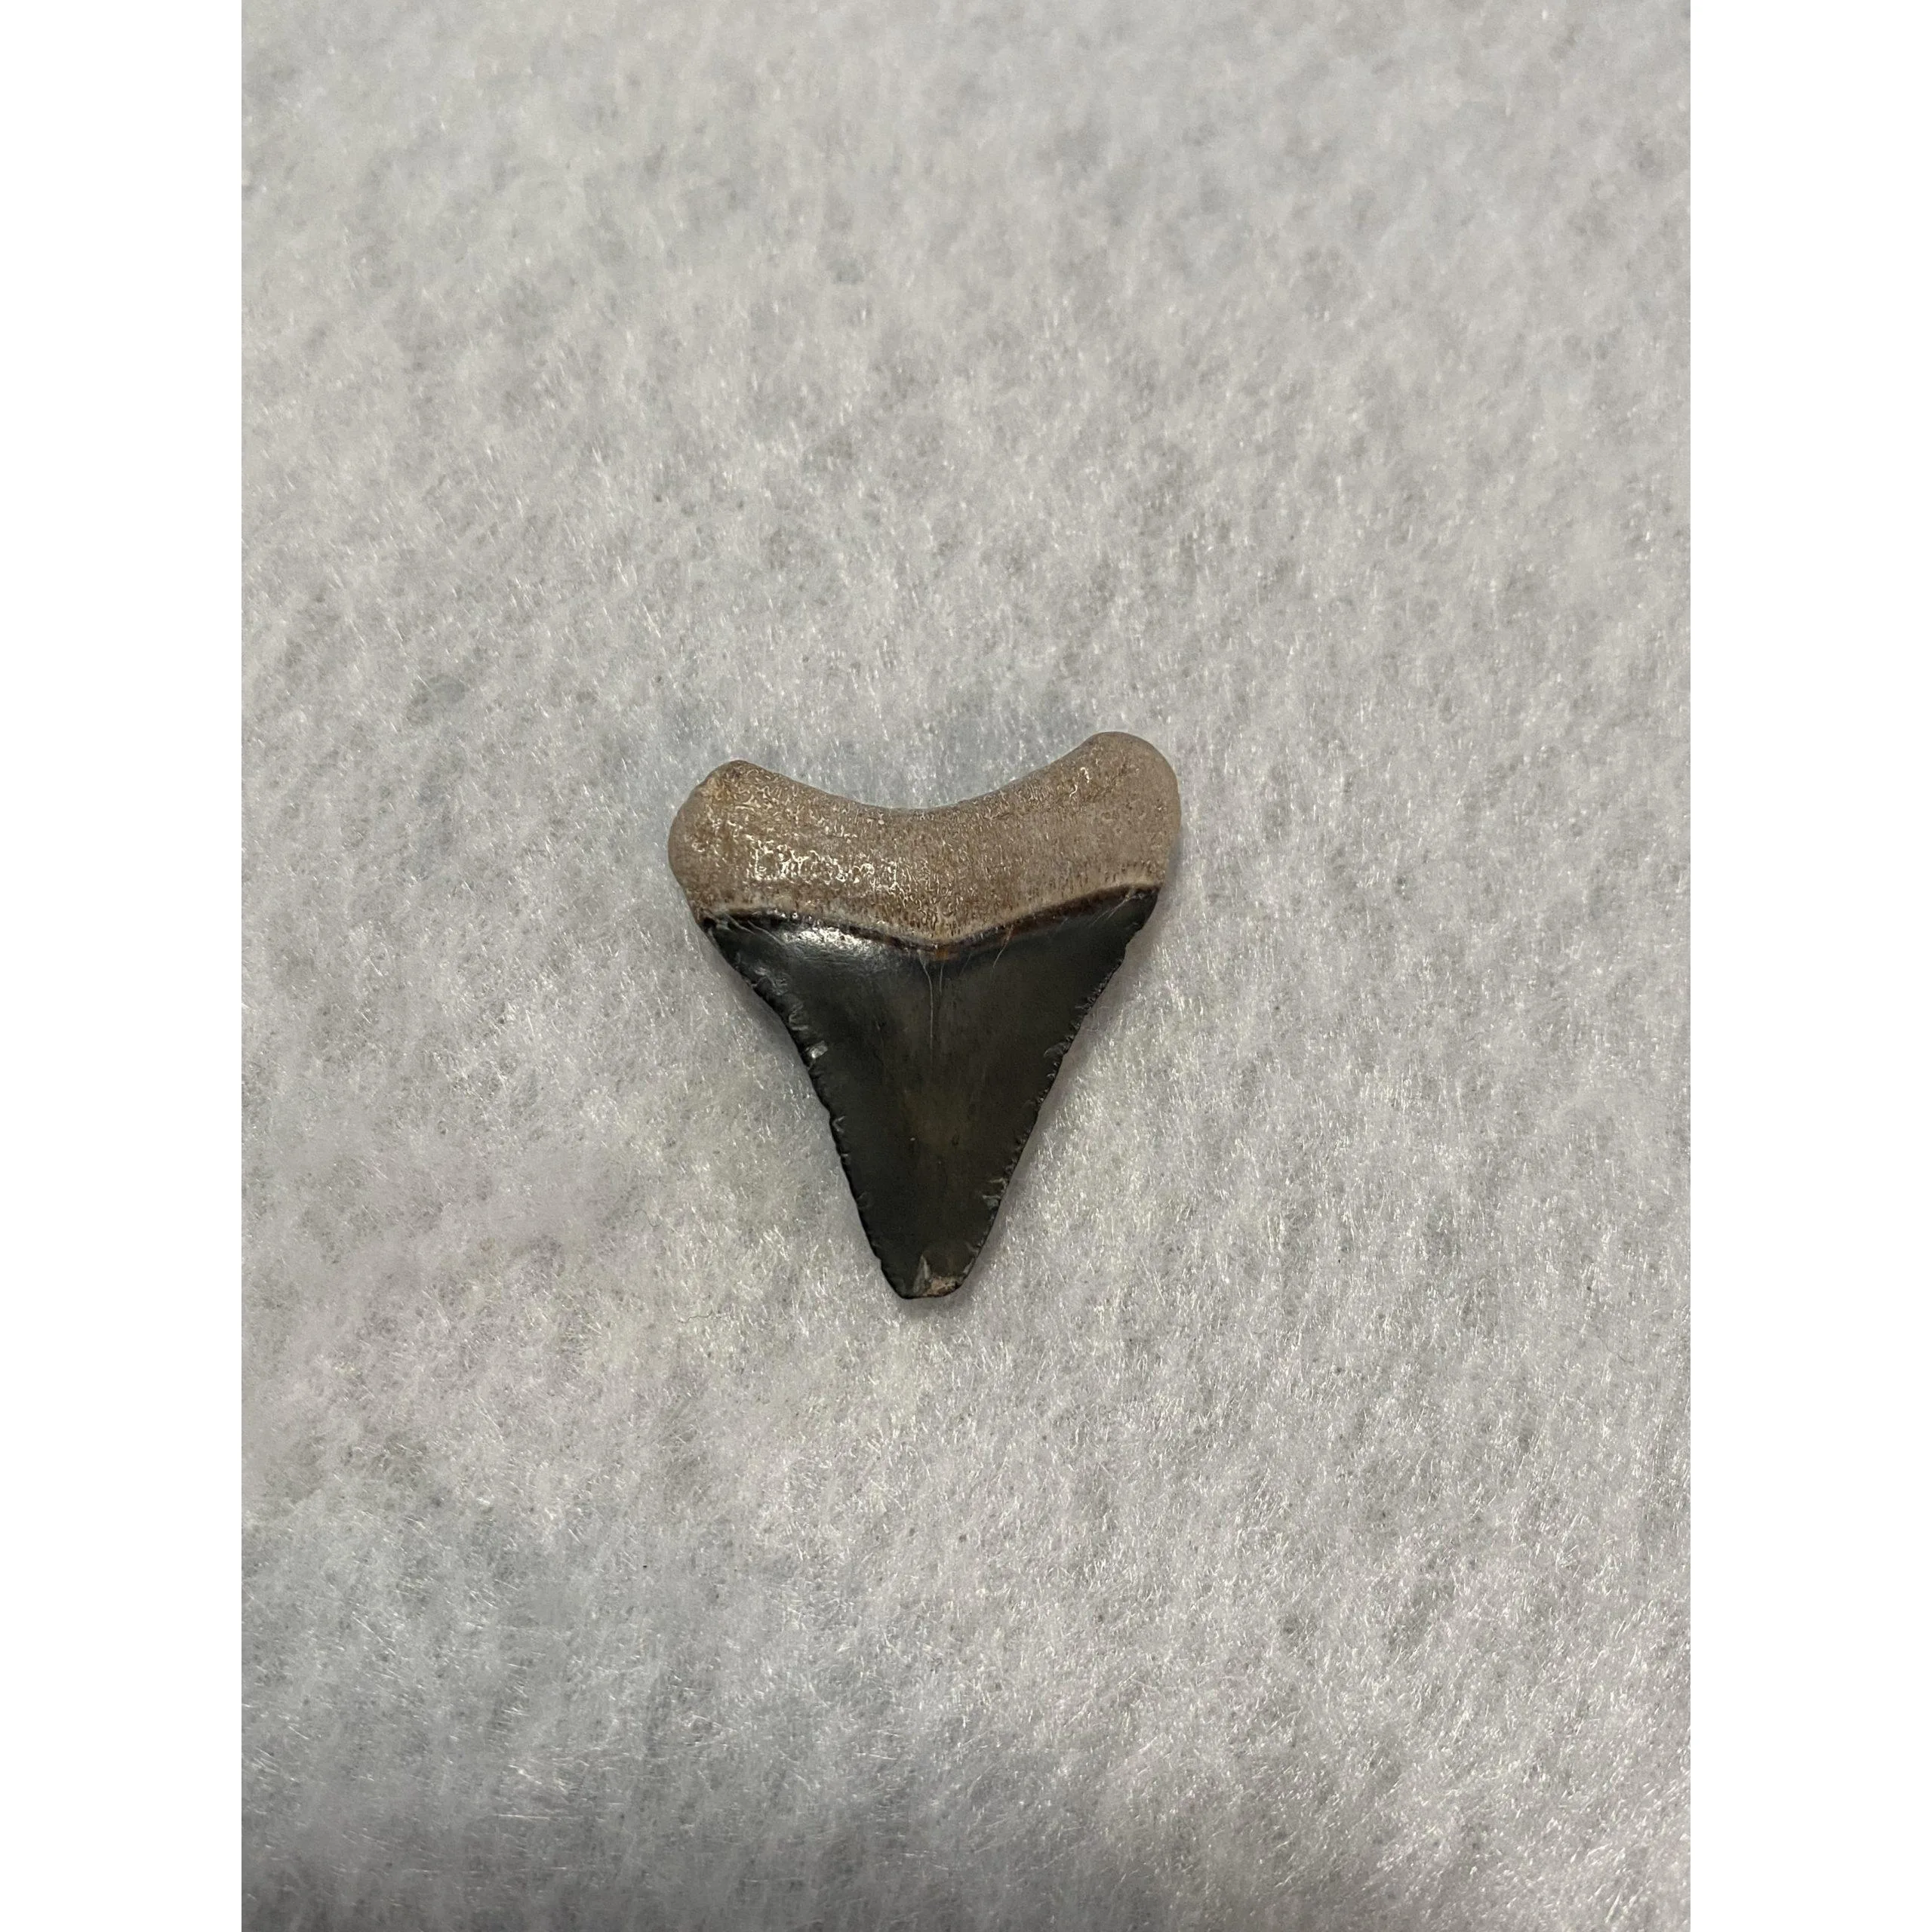 Megalodon Tooth, Bone Valley, Florida, 1.30 inch Prehistoric Online